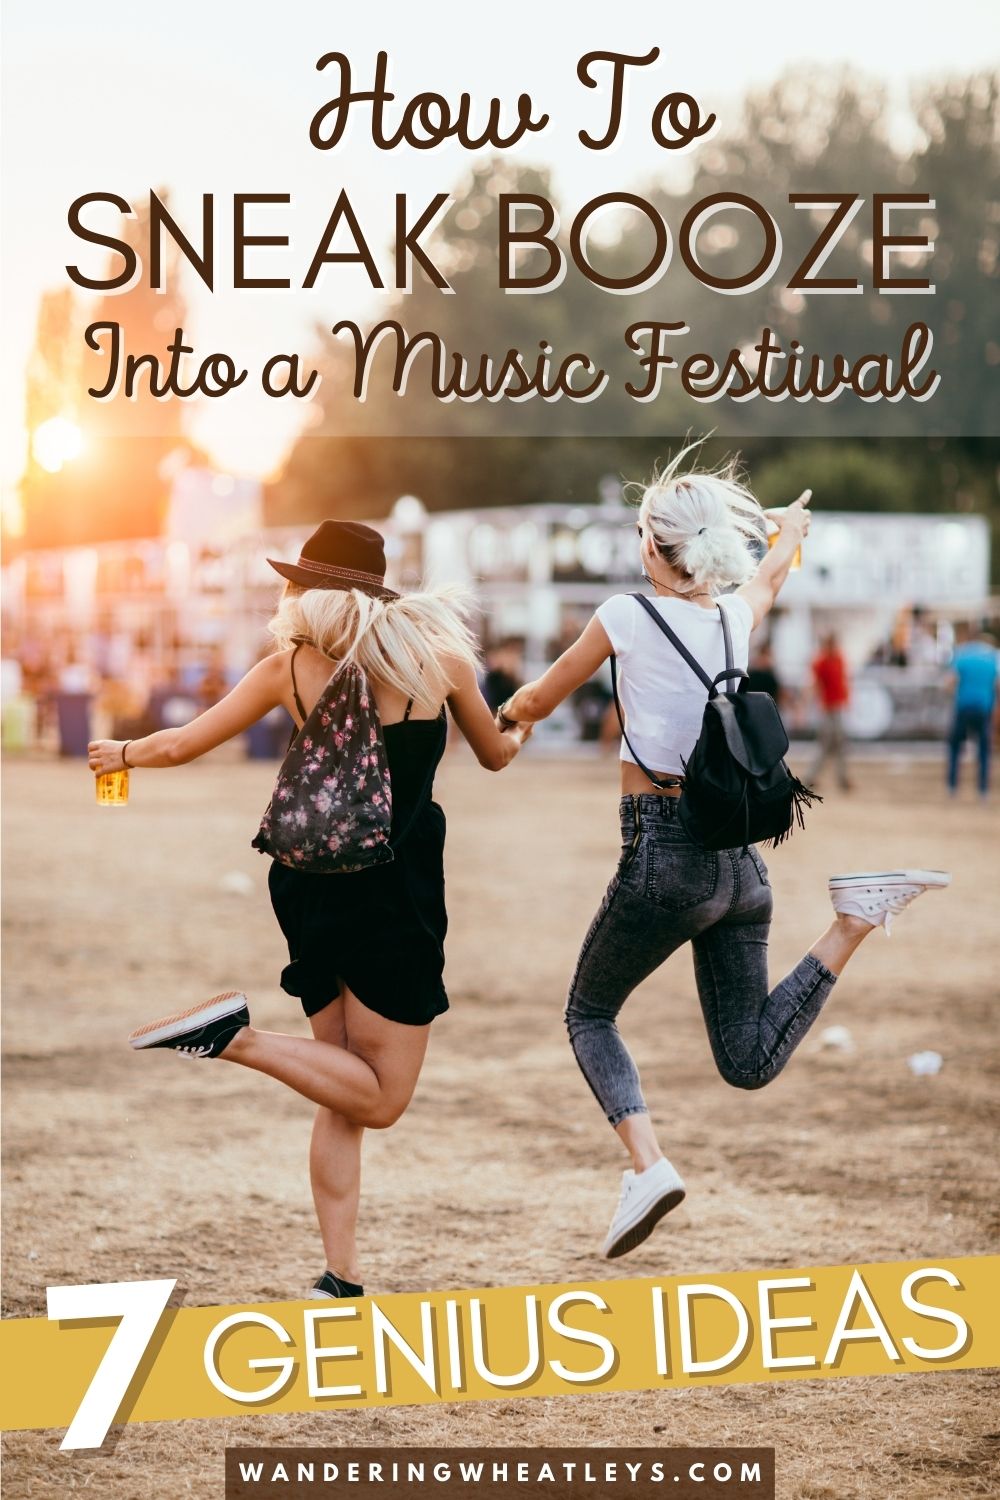 https://wanderingwheatleys.com/wp-content/uploads/2018/12/sneak-alcohol-liquor-wine-into-music-festival-concert-pinterest-2.jpg